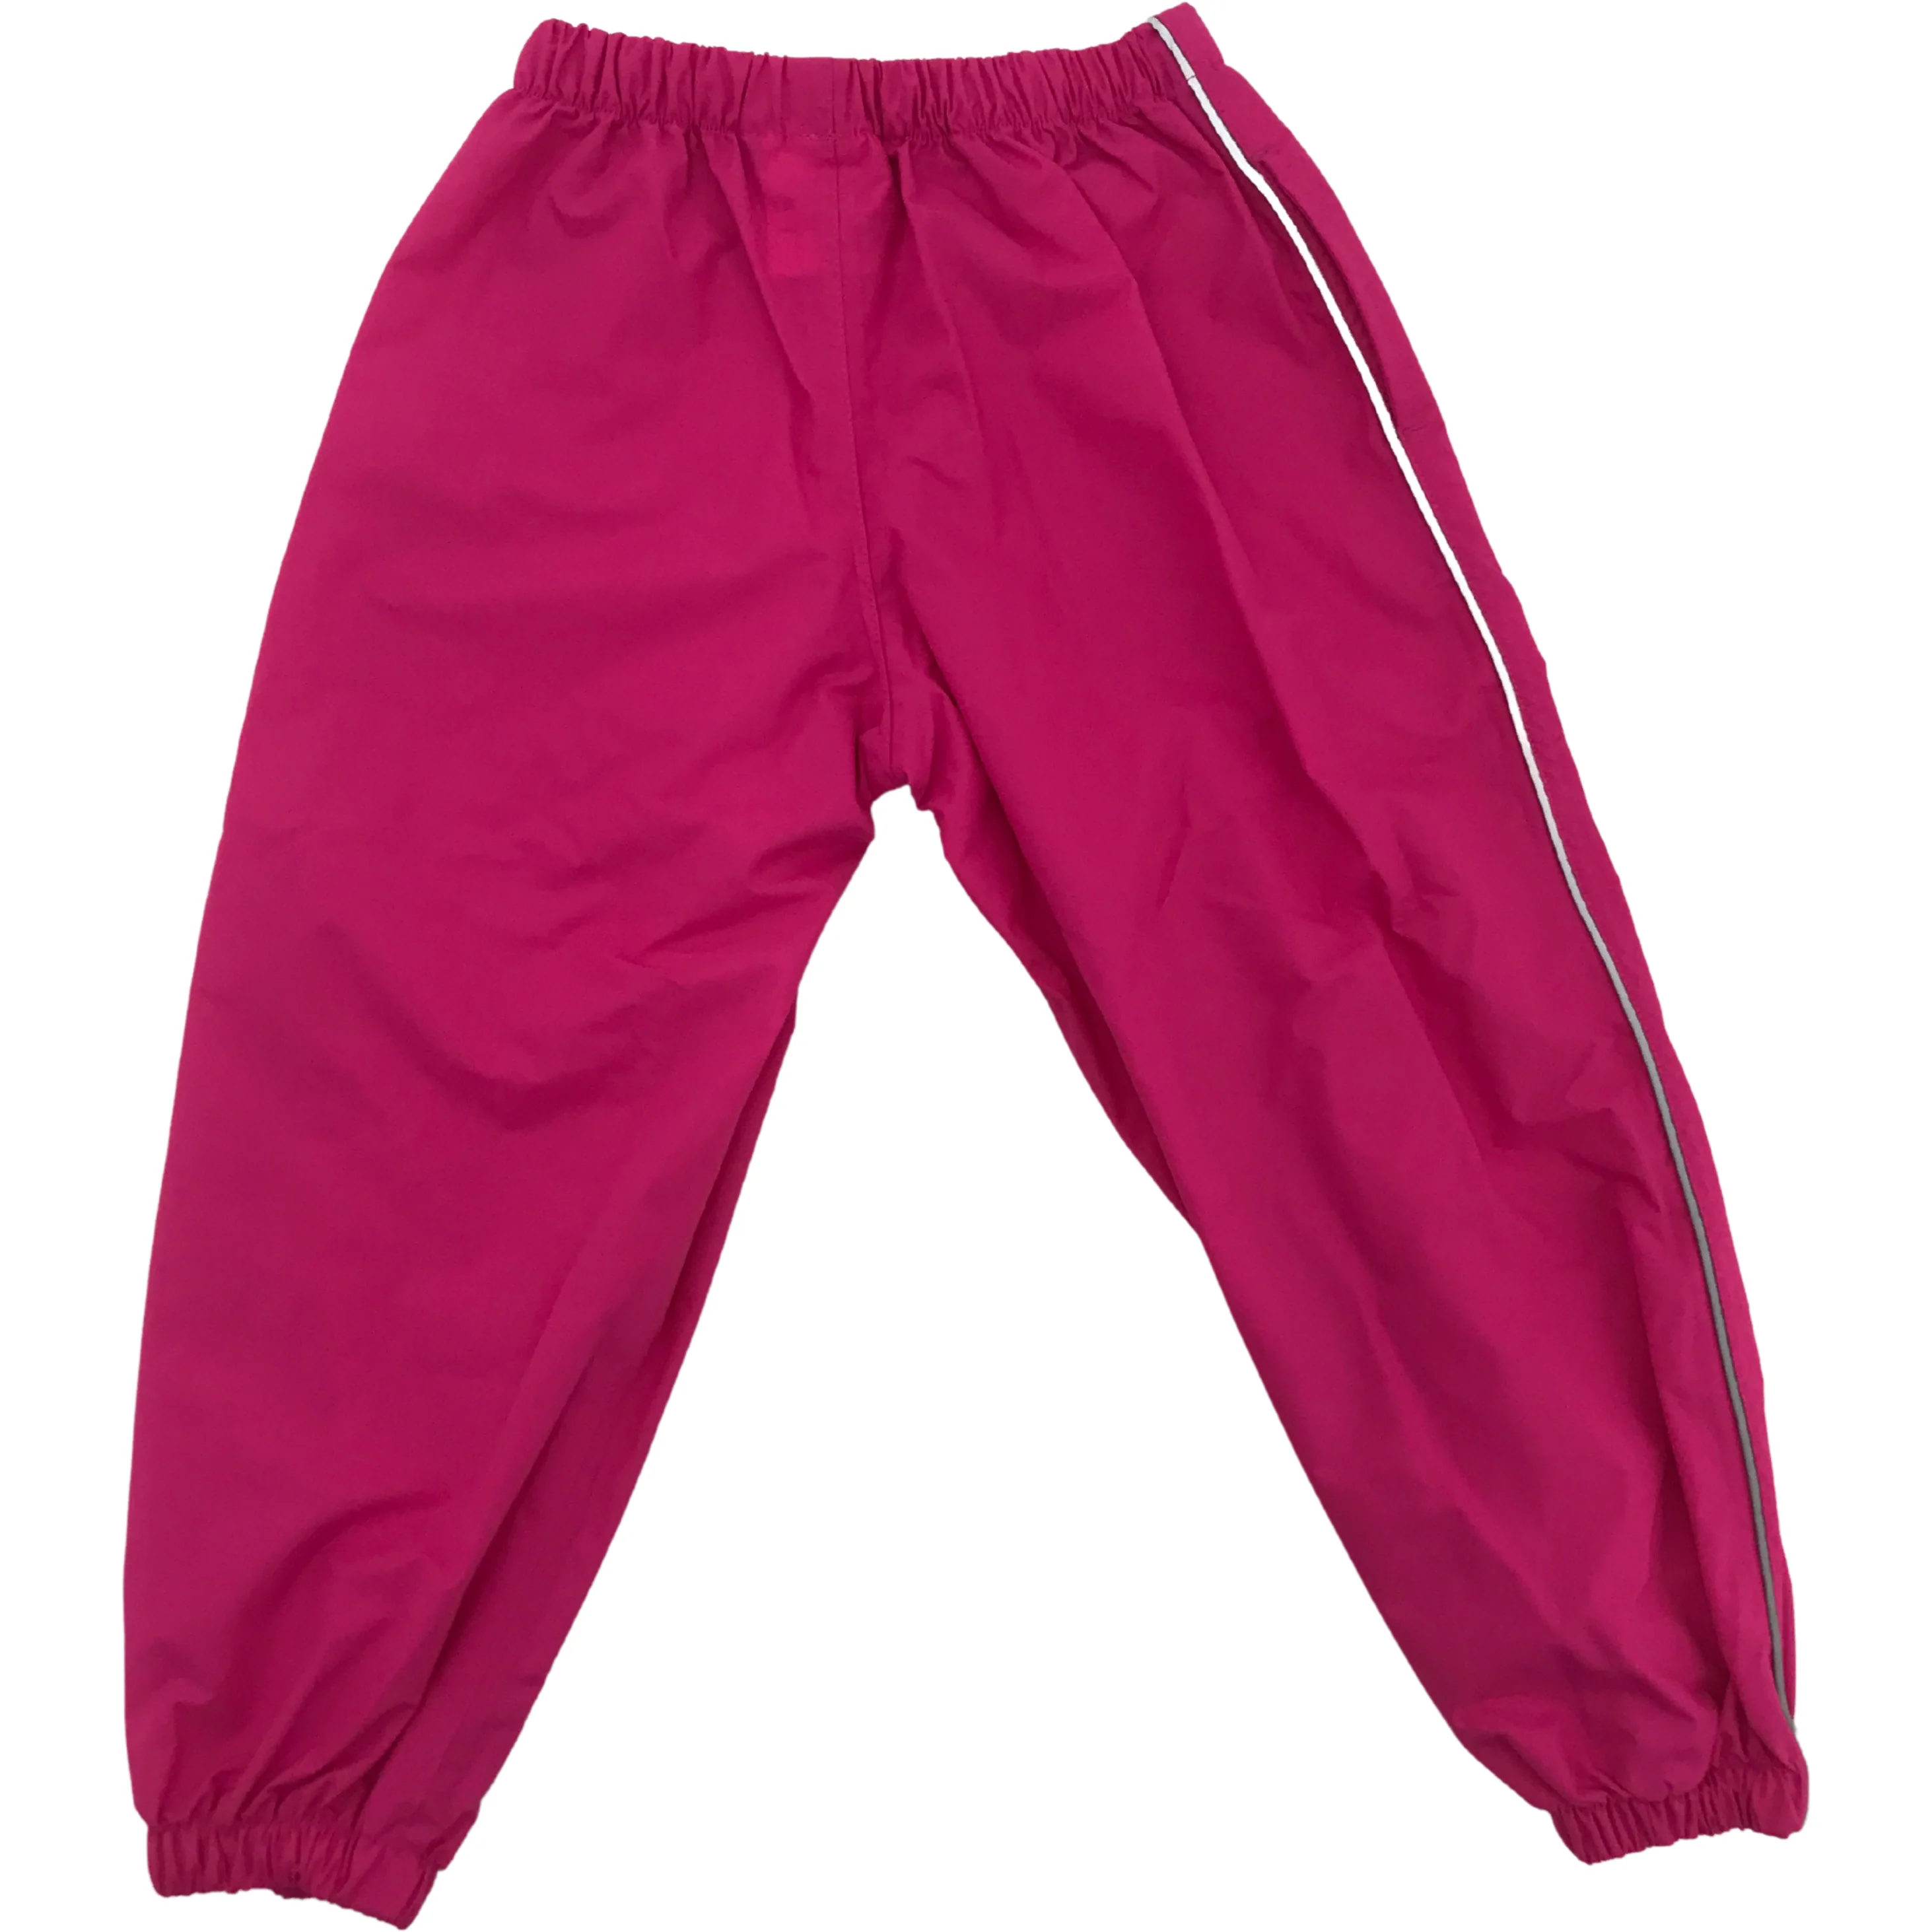 Splashy Toddler Rain Pants / Waterproof pants / Wind Pants / Pink / 18-24 Months